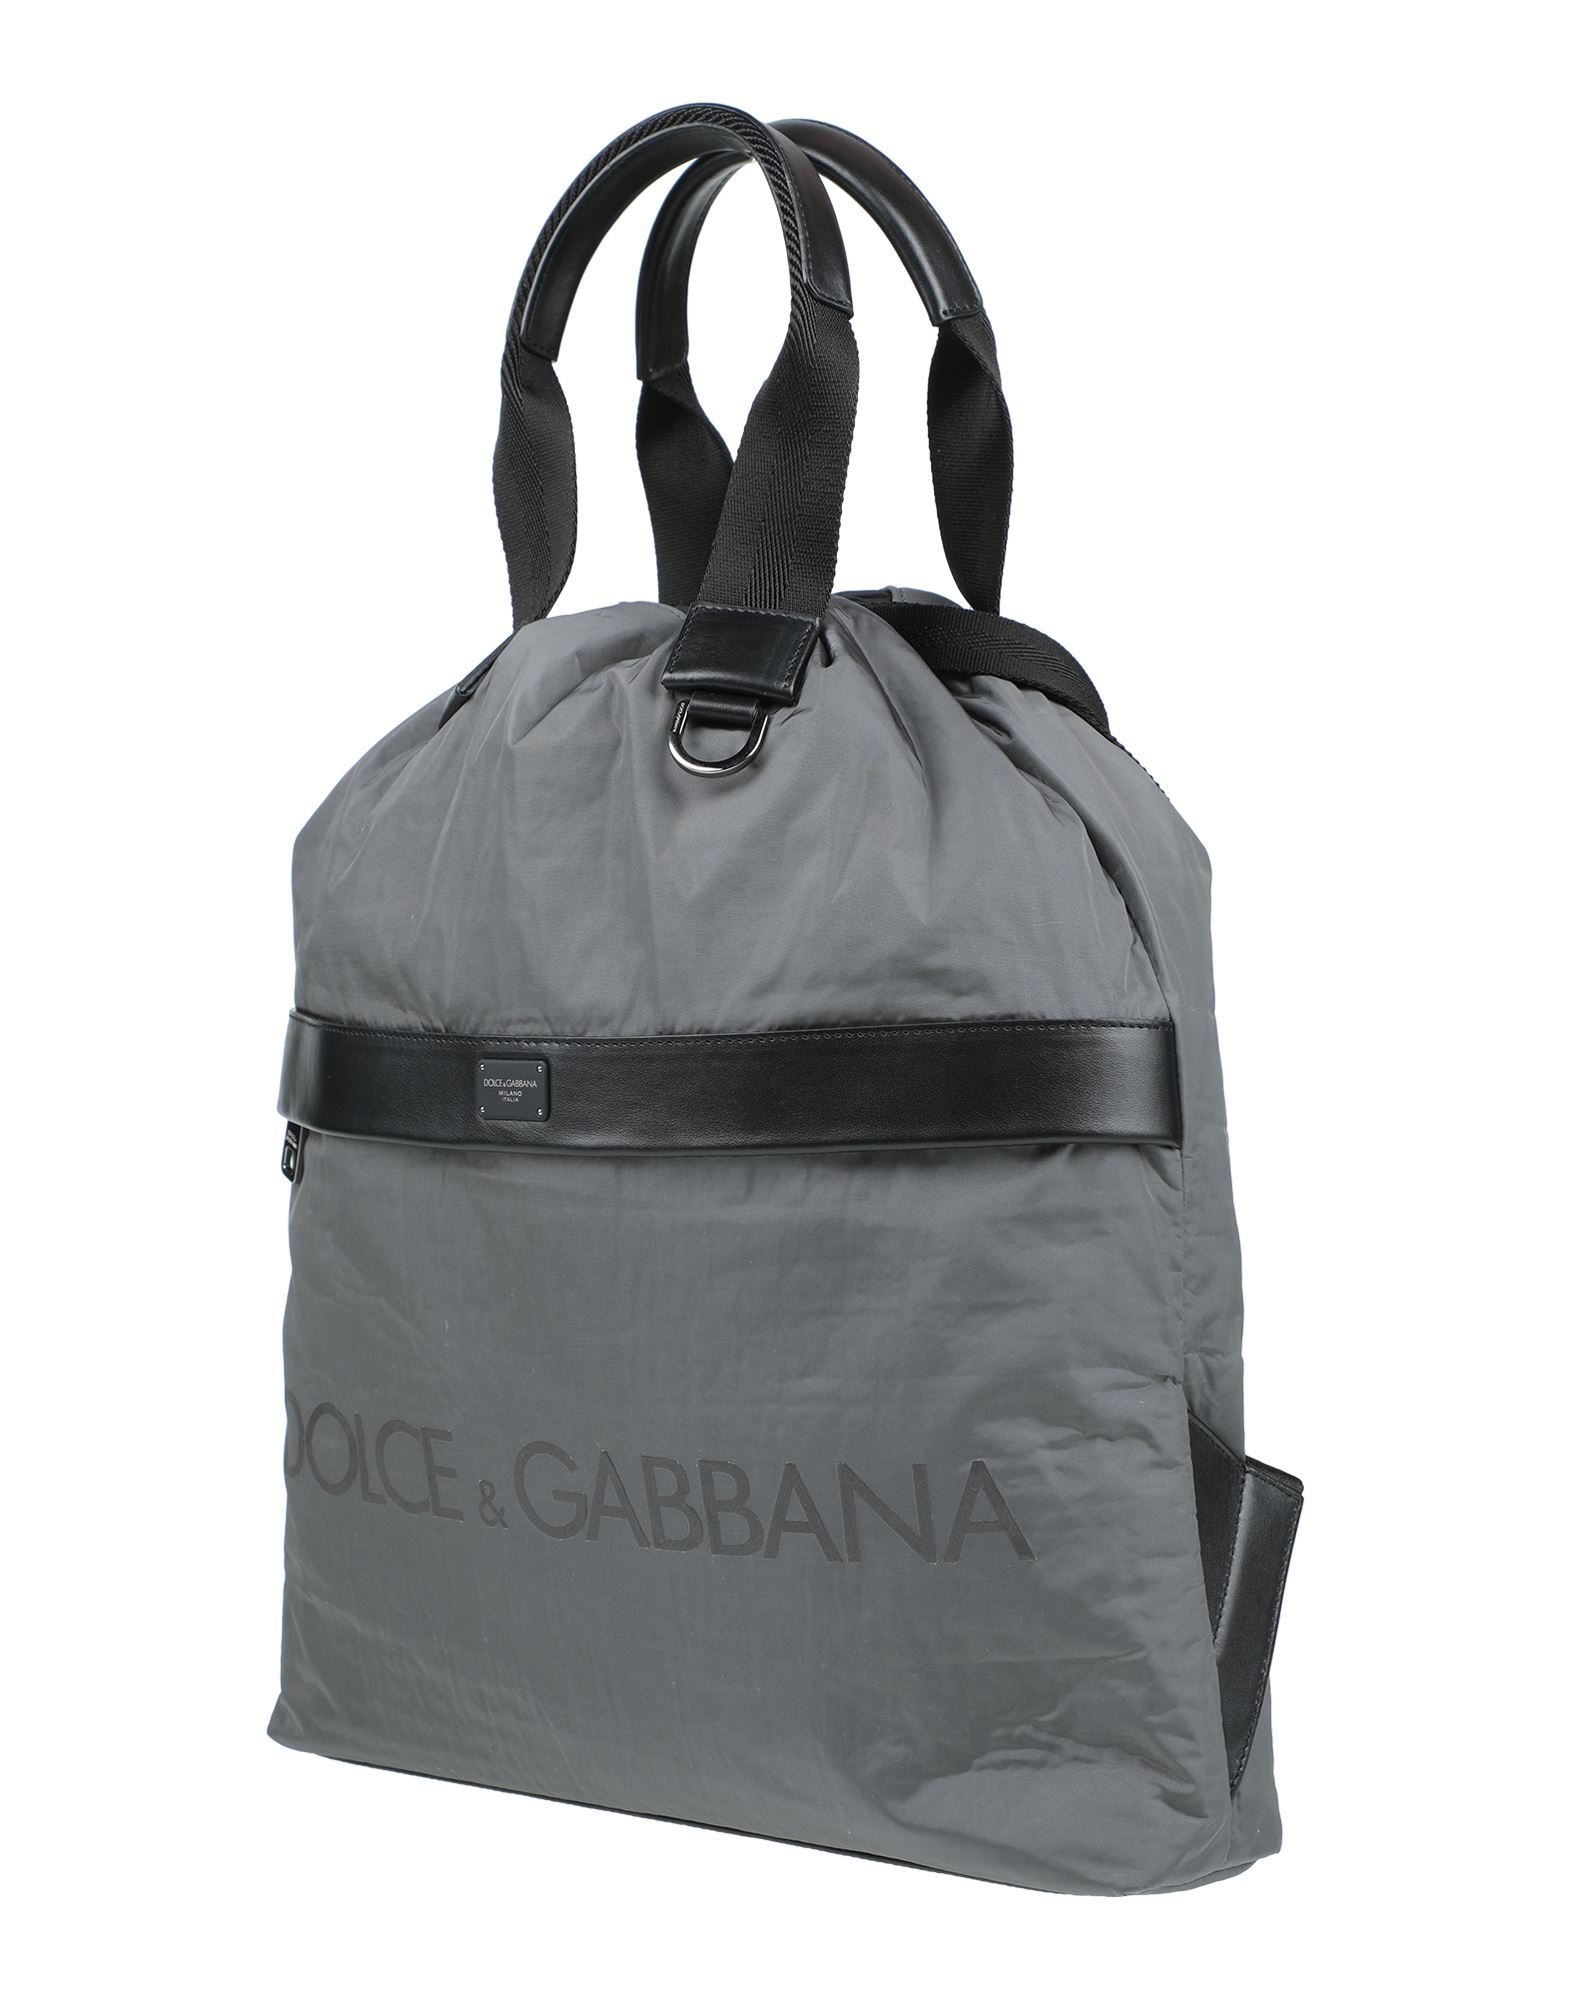 Dolce & Gabbana Backpacks & Fanny Packs In Lead